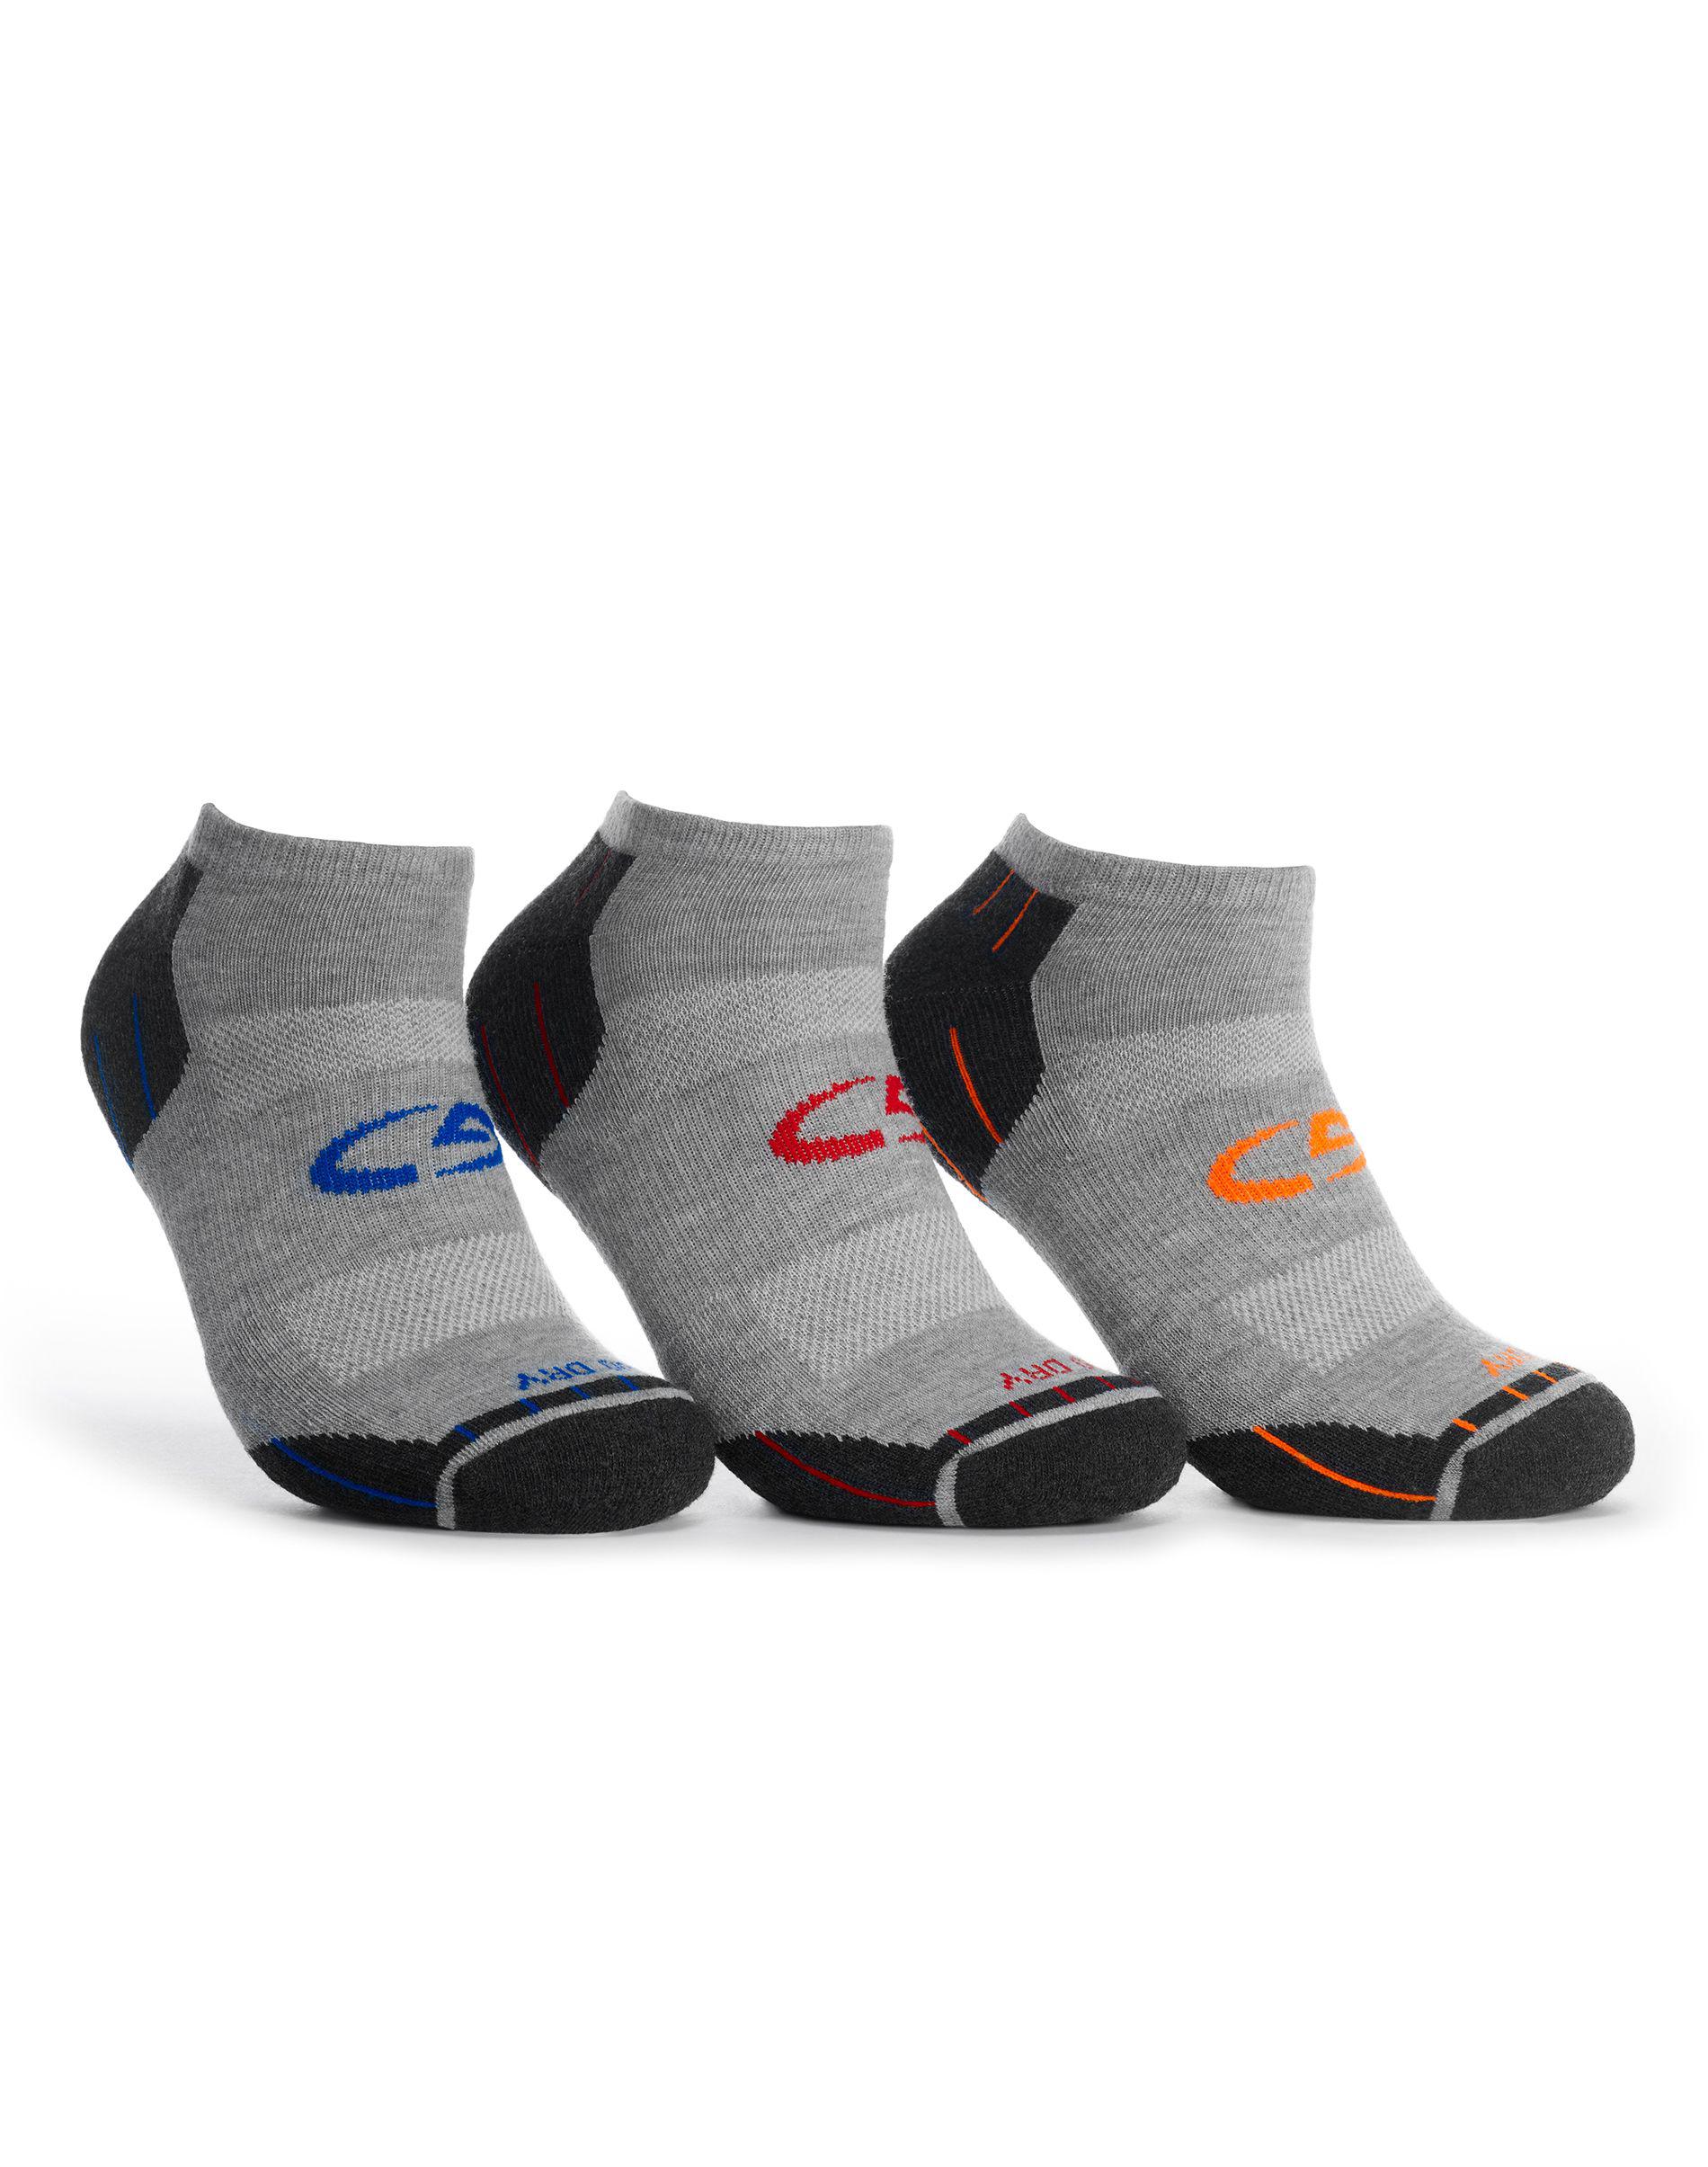 c9 champion socks